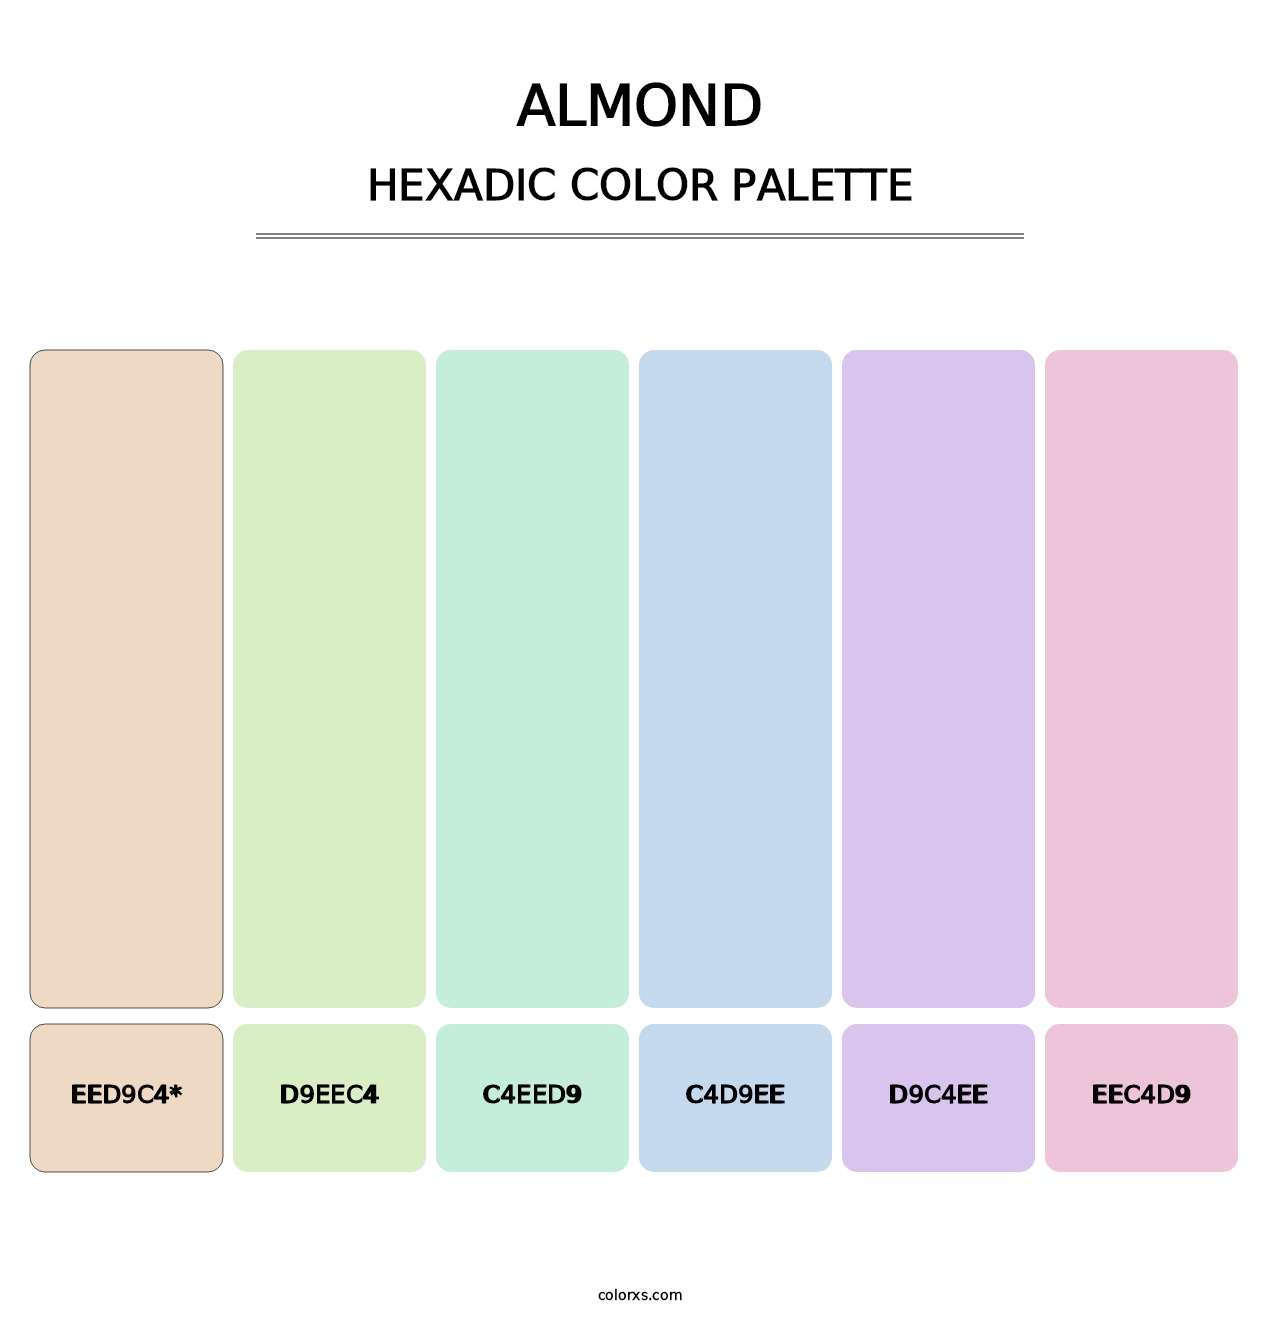 Almond - Hexadic Color Palette